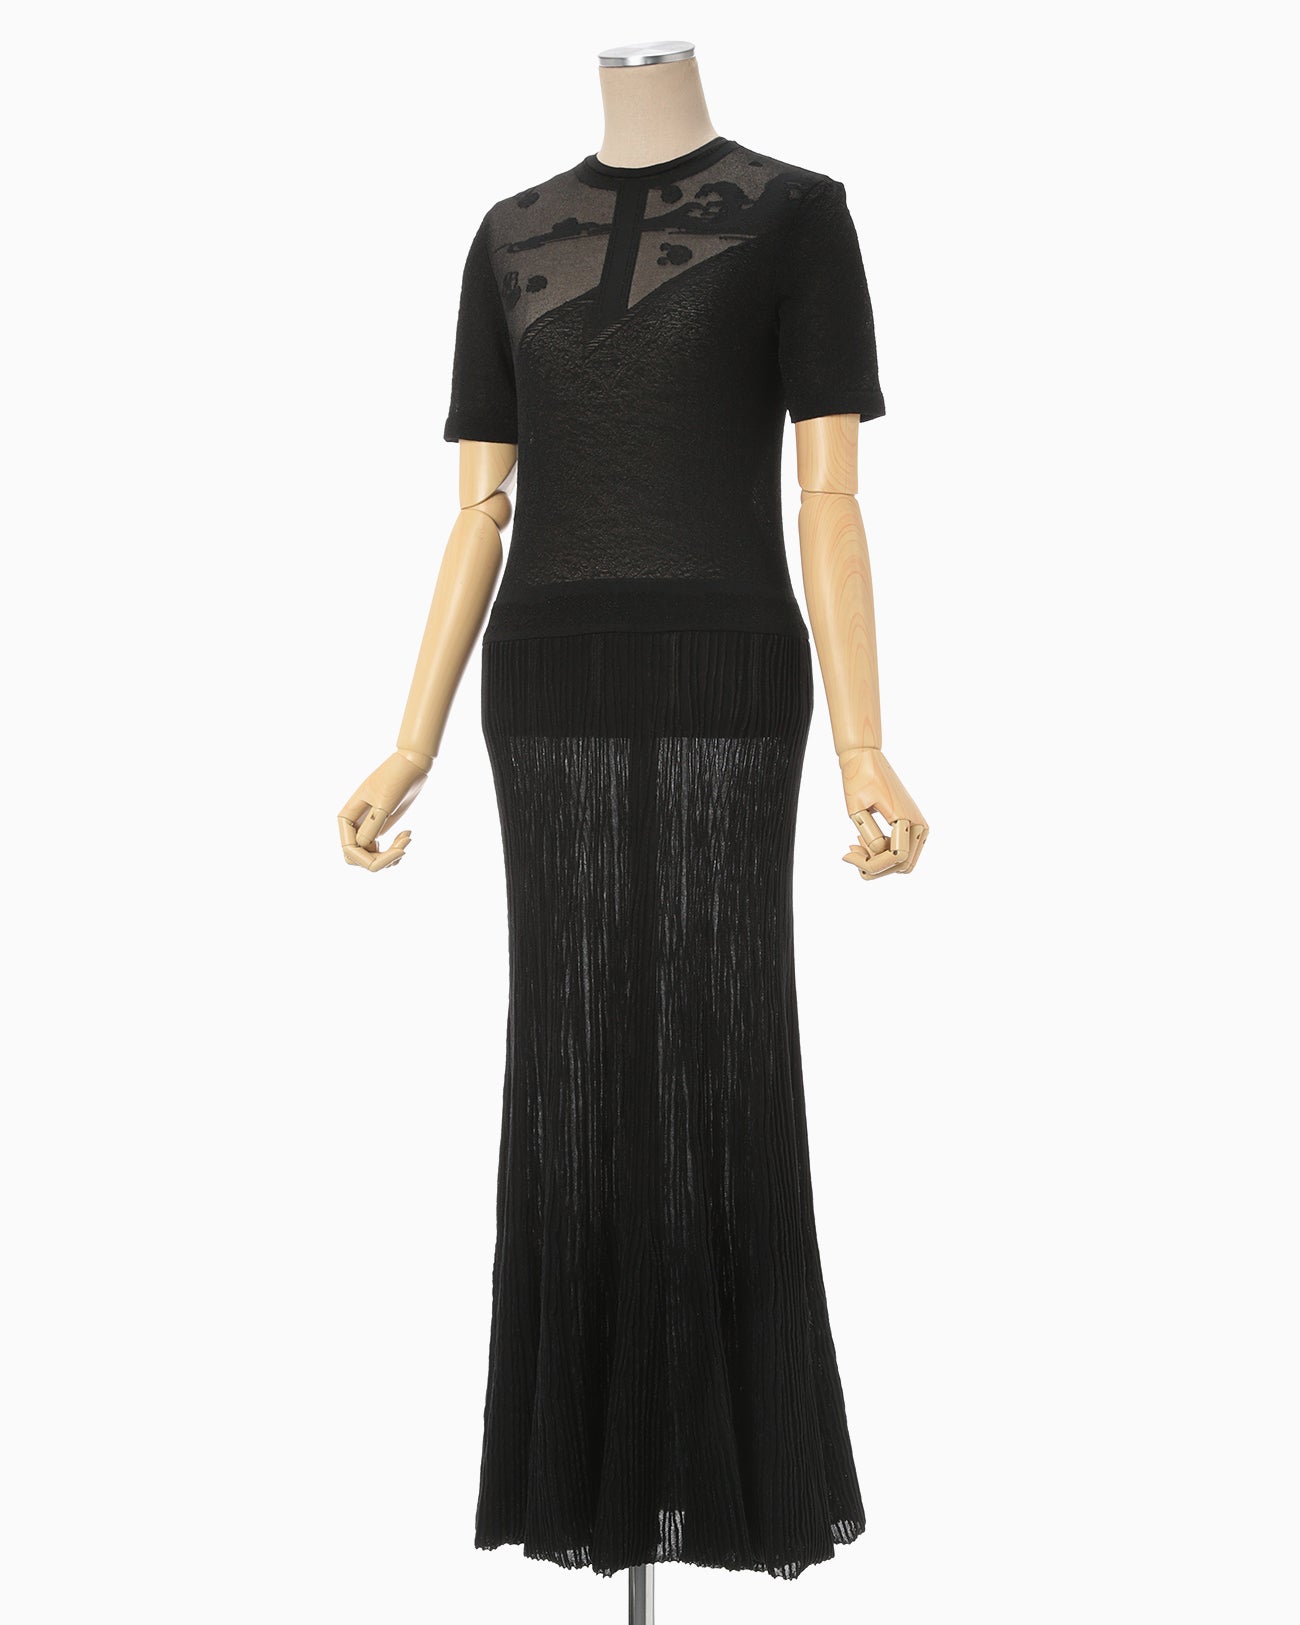 Landscape Graphic Sheer Knitted Dress - black